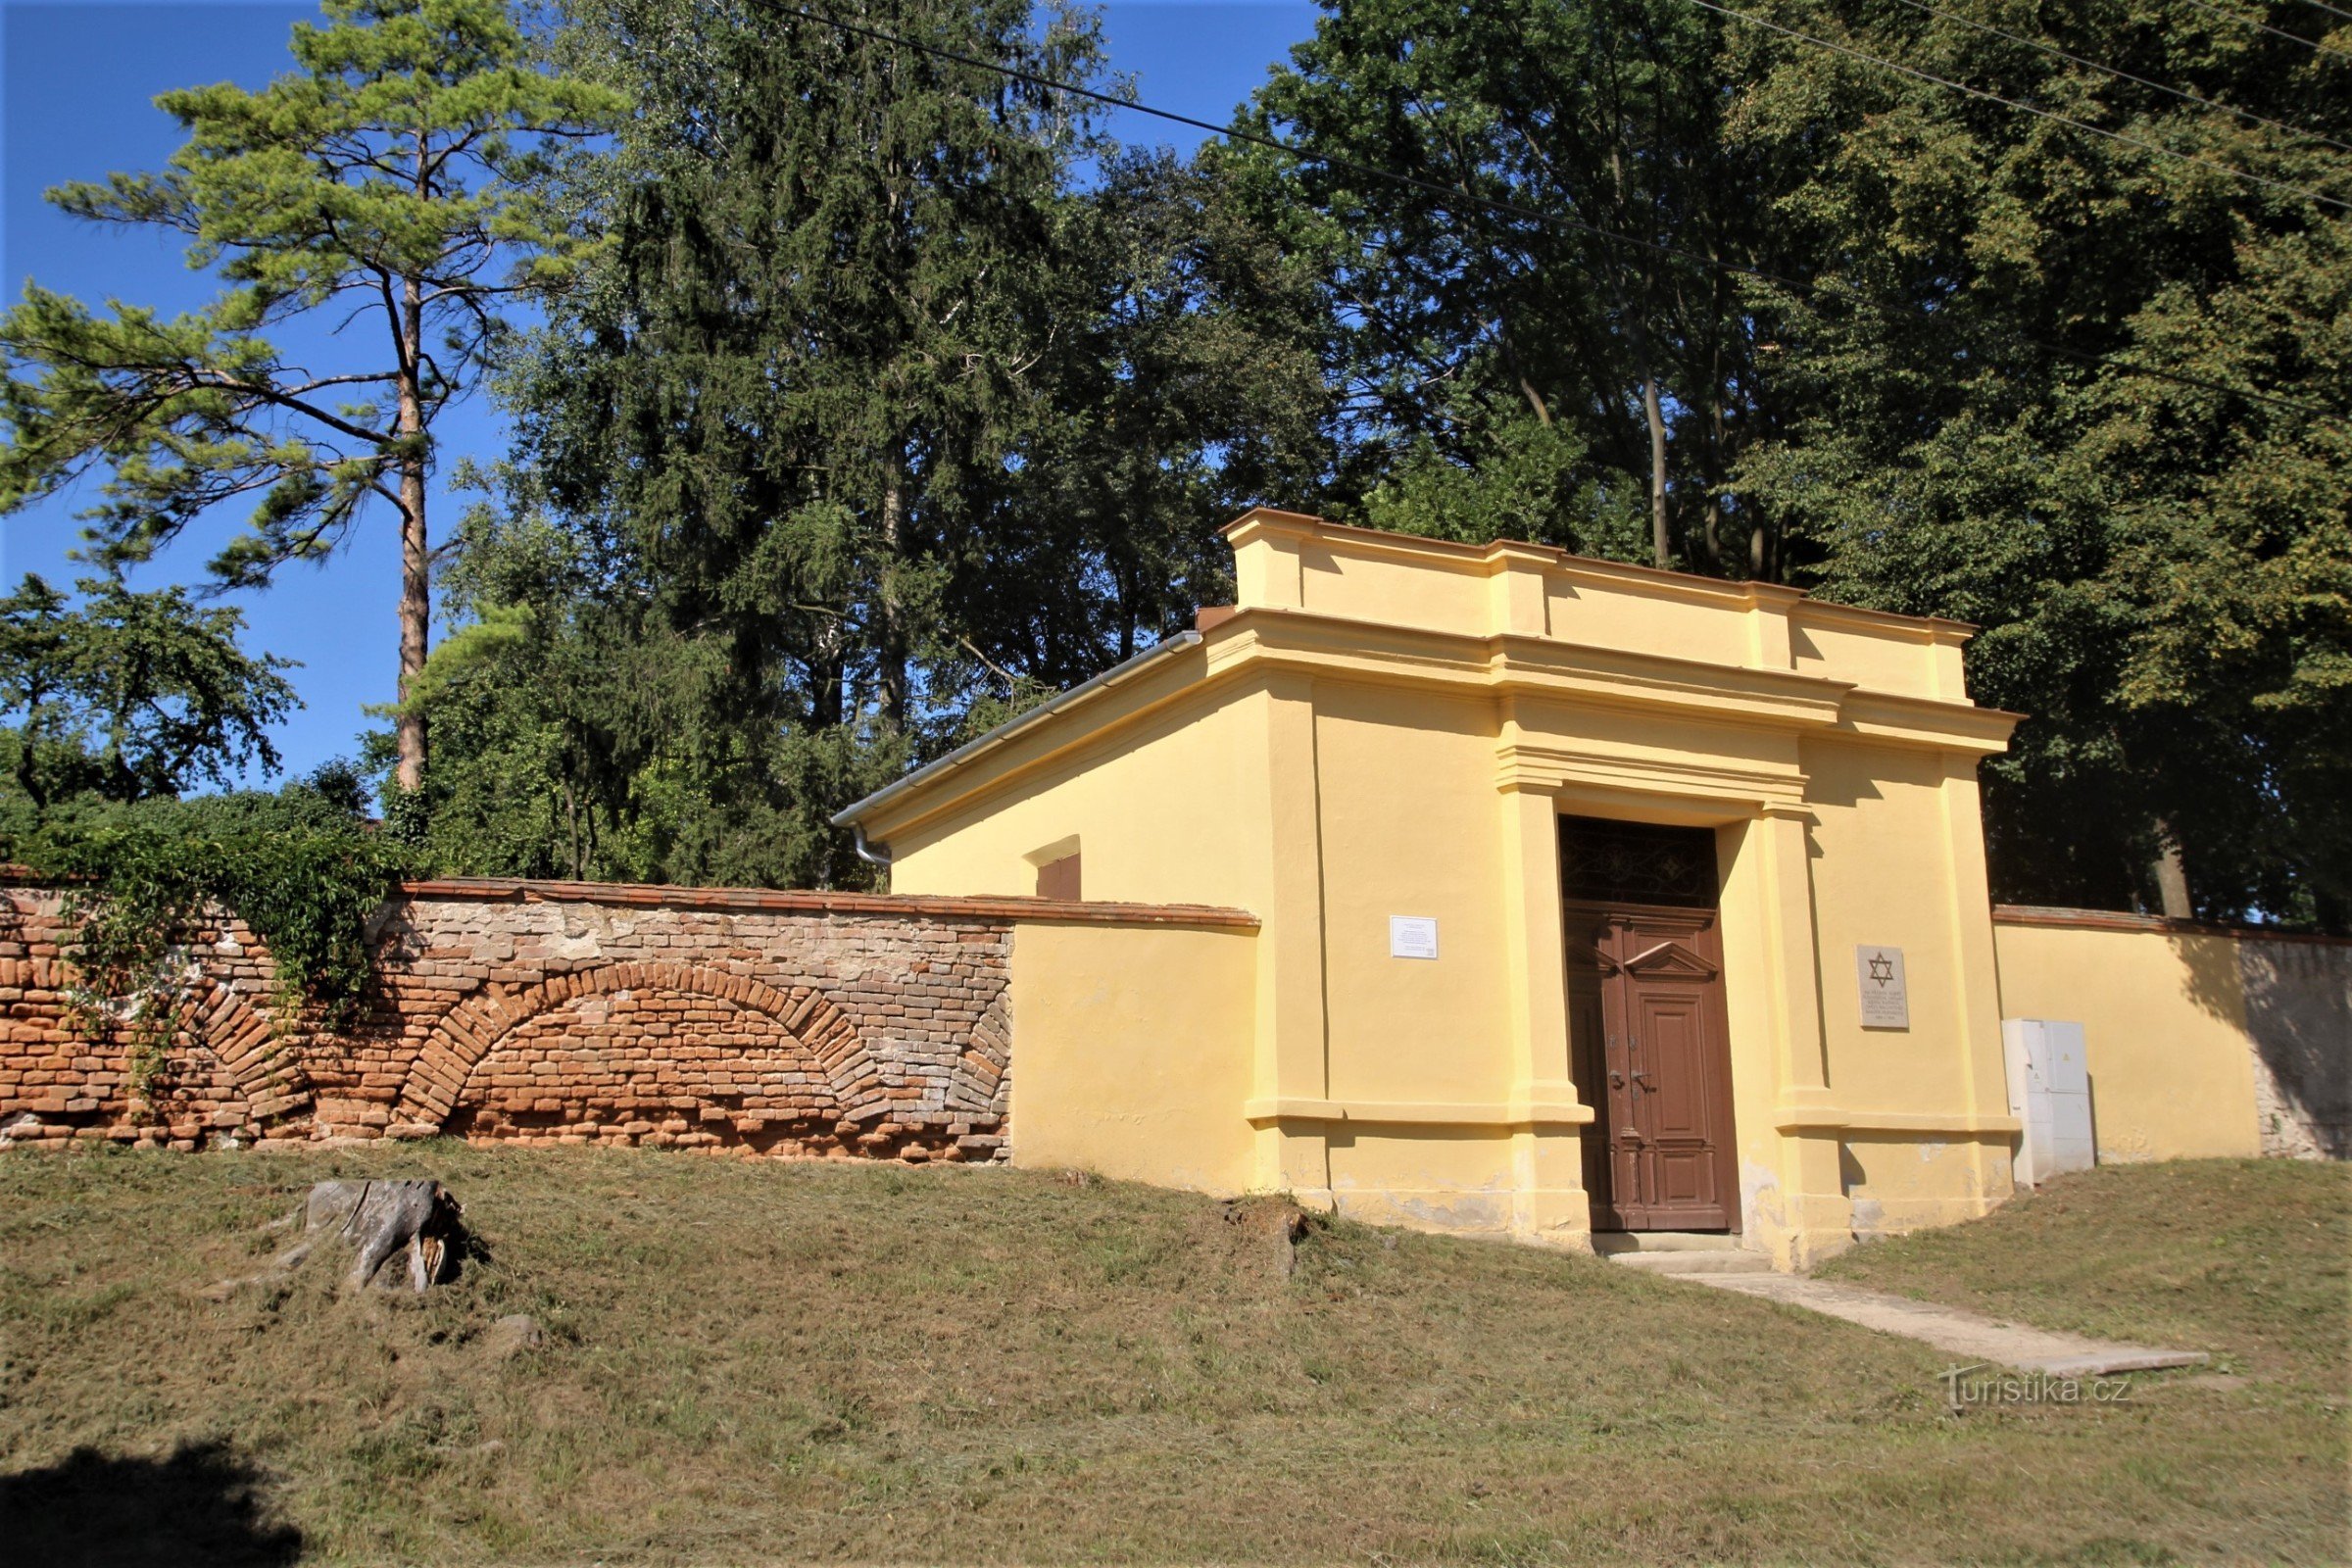 Bučovice - judovsko pokopališče